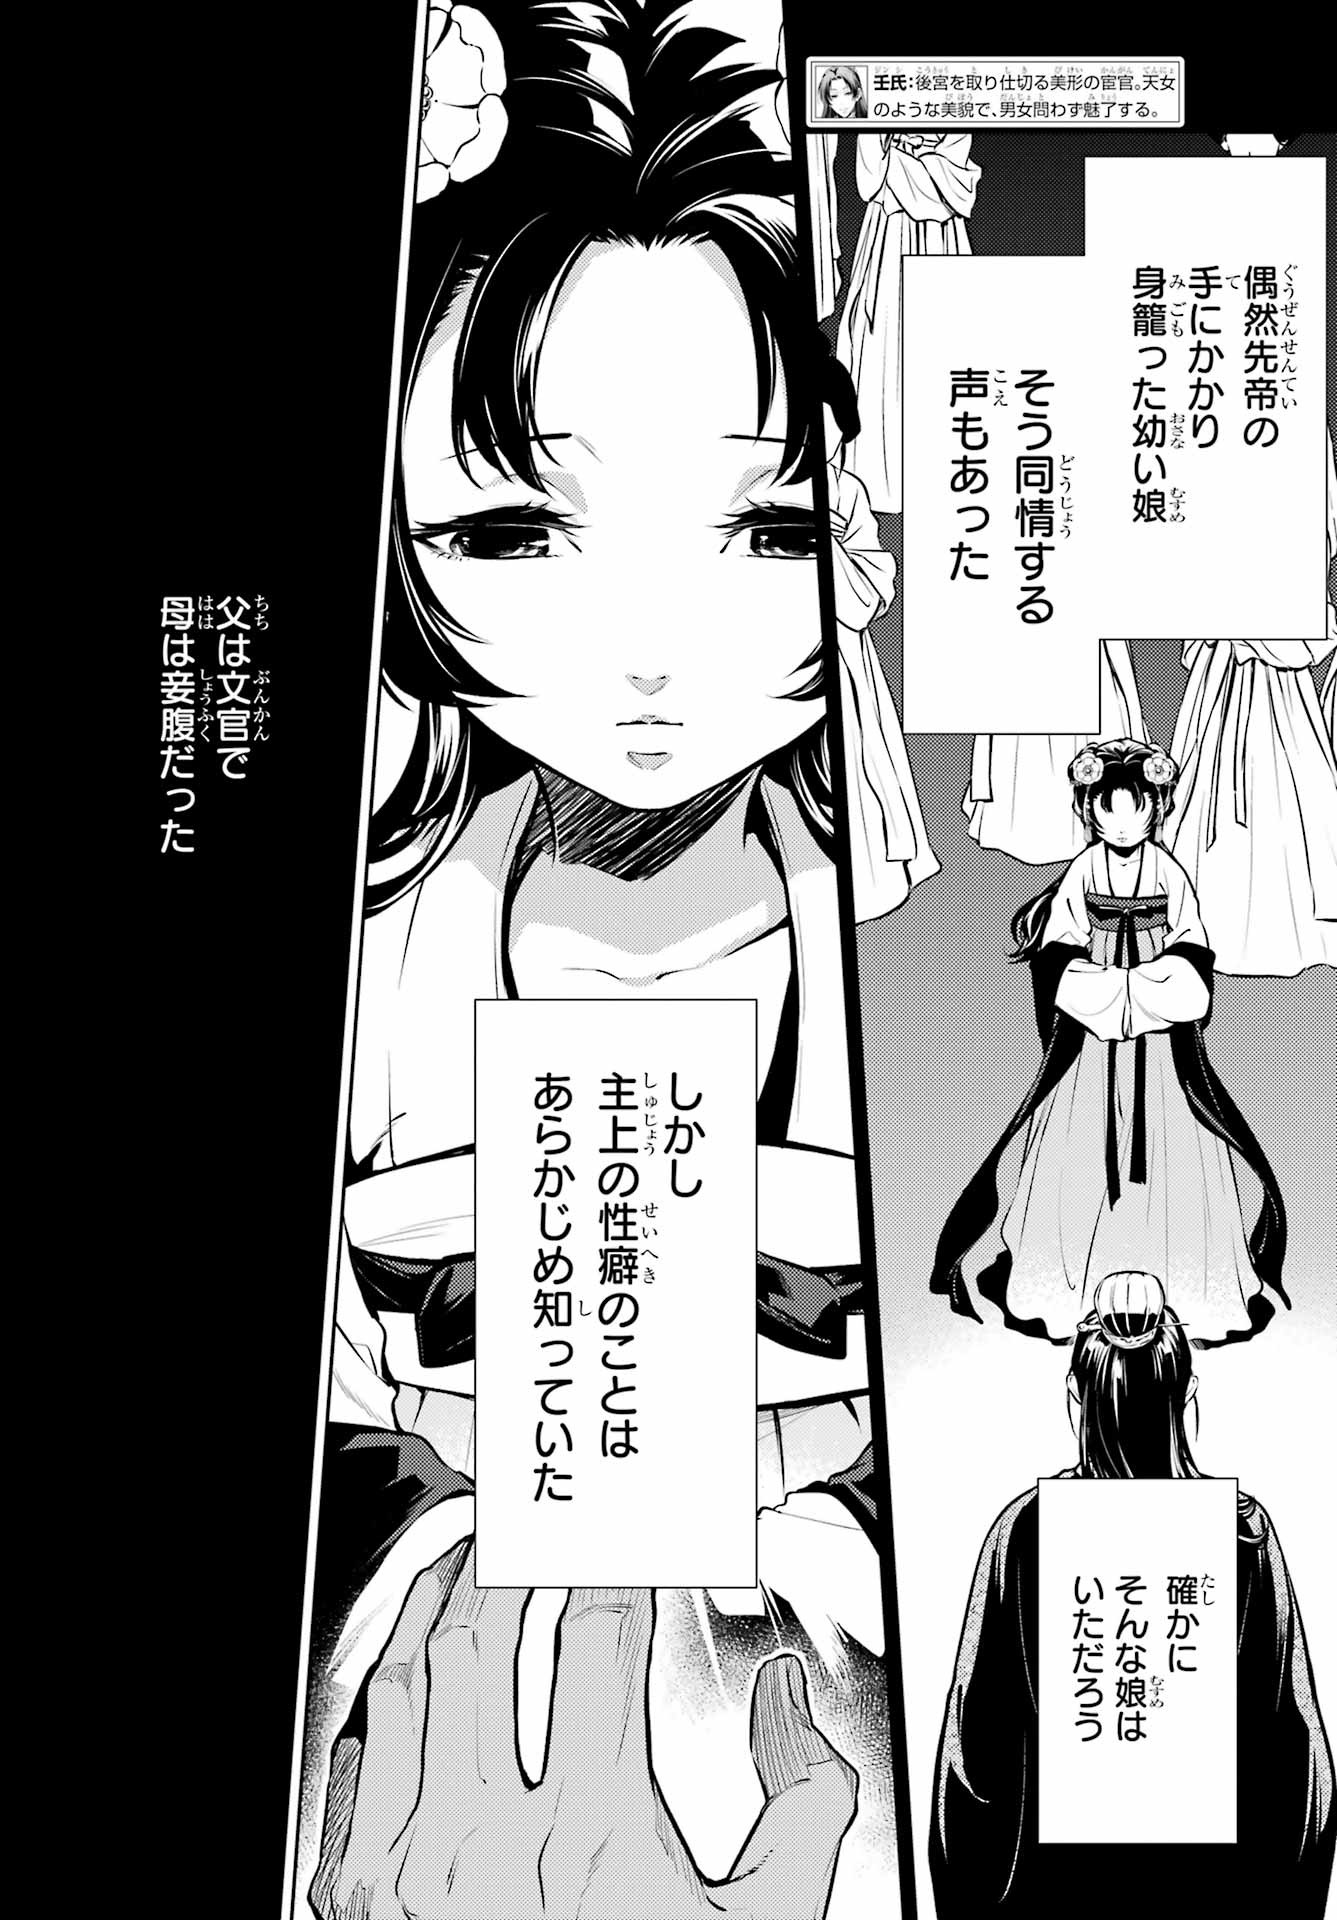 Kusuriya no Hitorigoto - Chapter 58 - Page 4